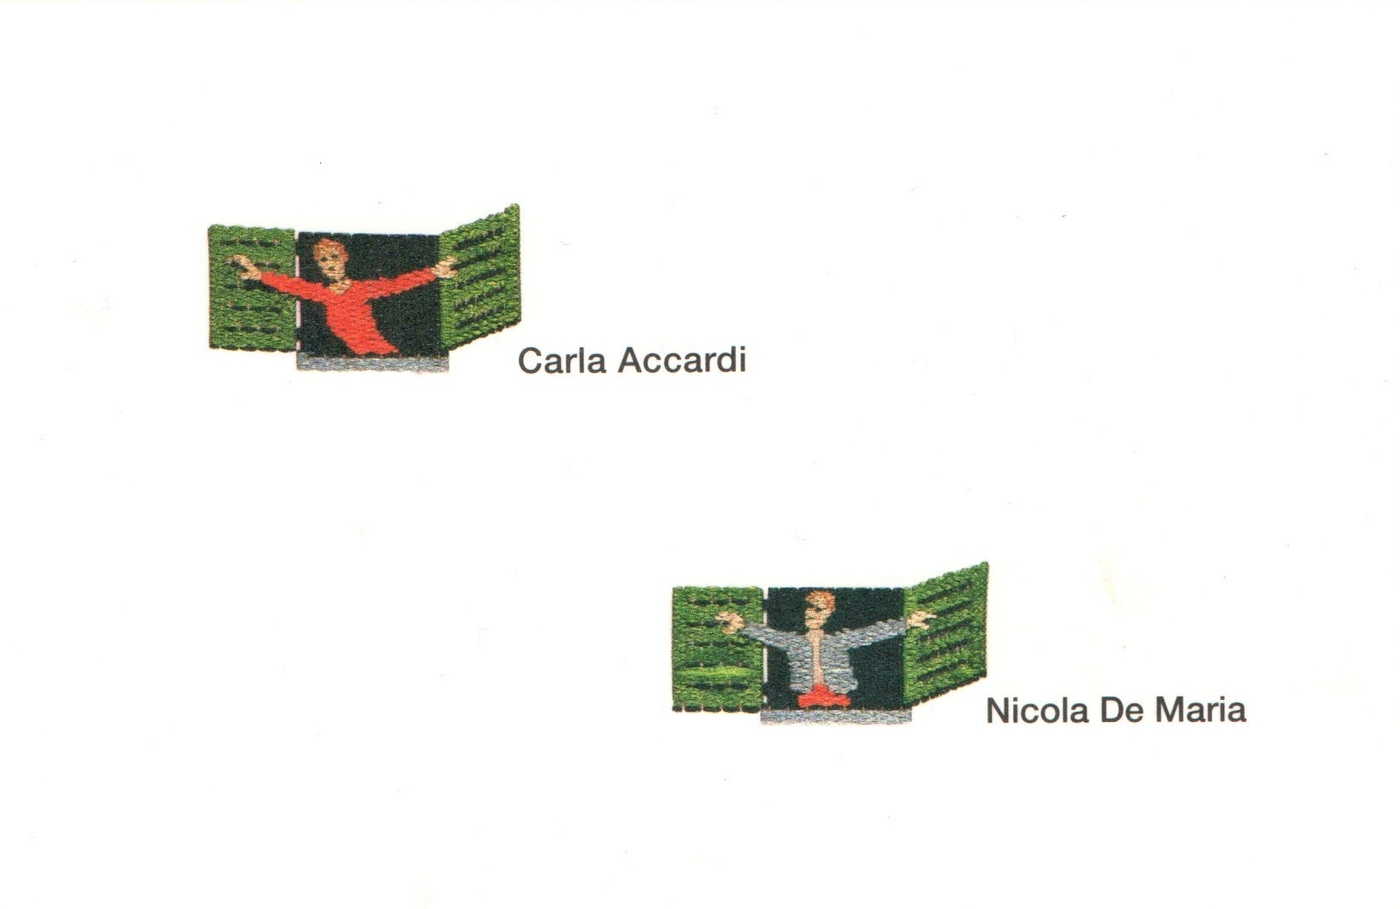 Carla Accardi, Nicola De Maria, Finestre